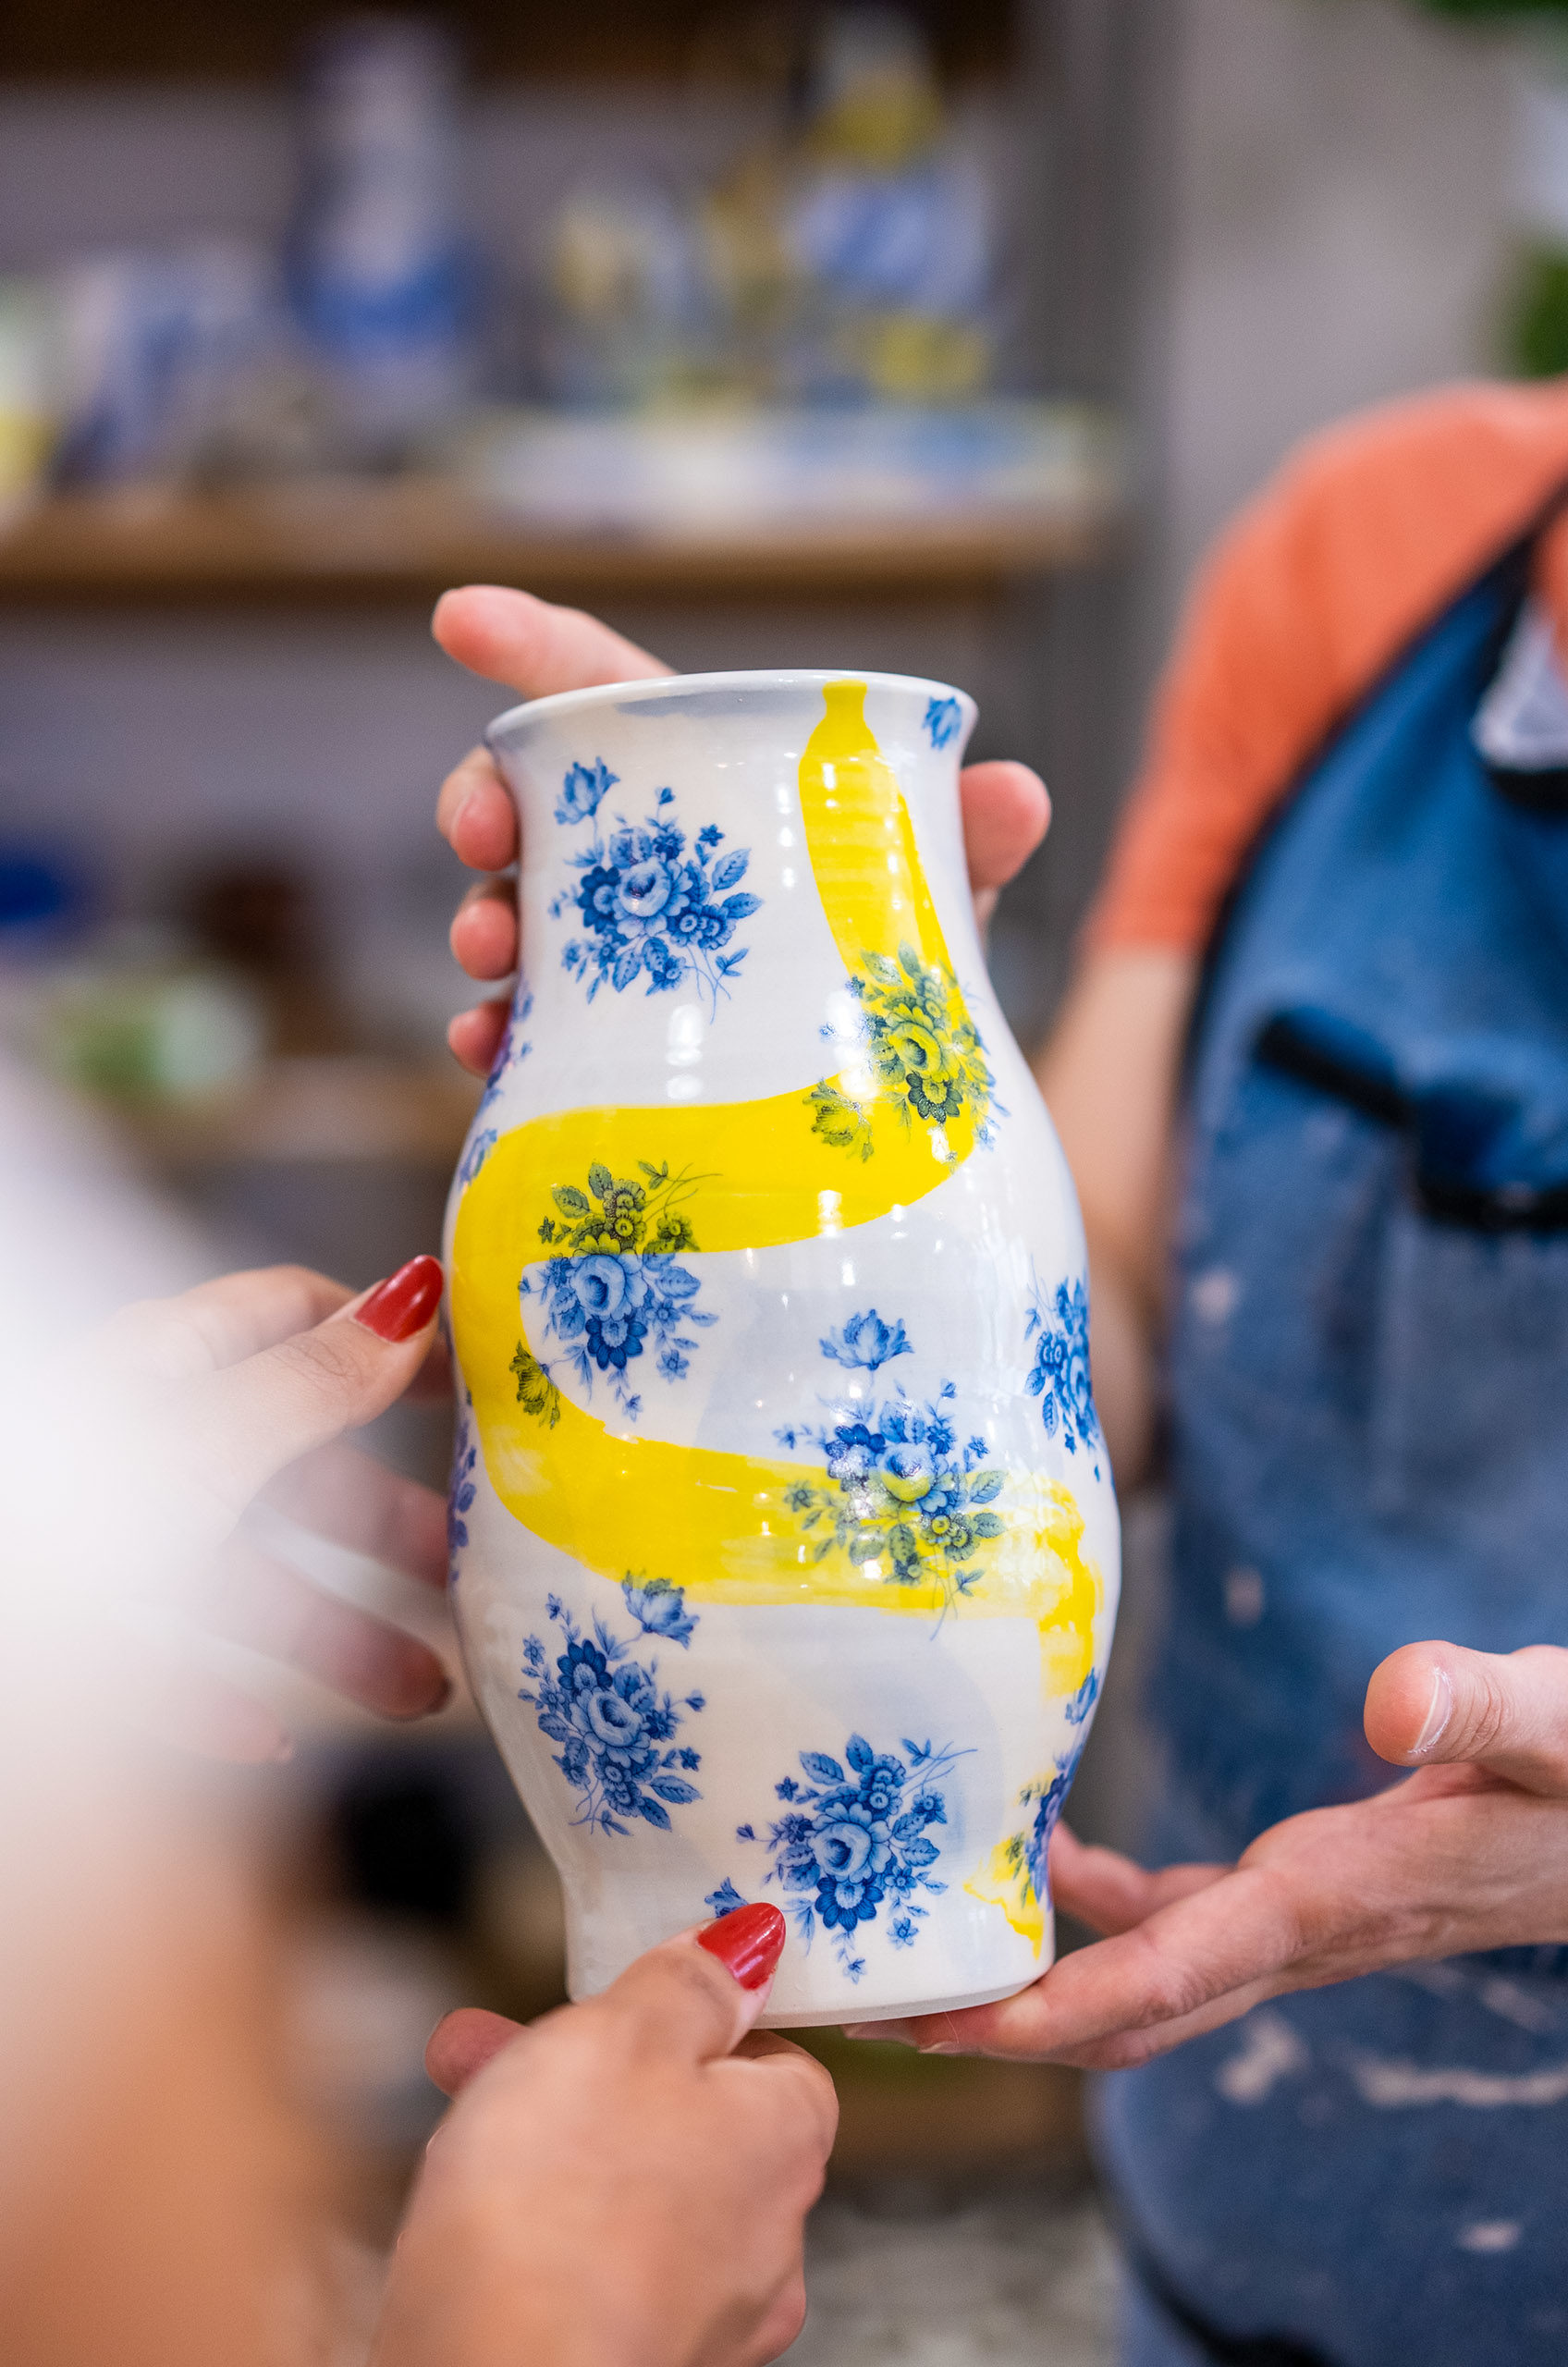 Image of someone holding a vase.